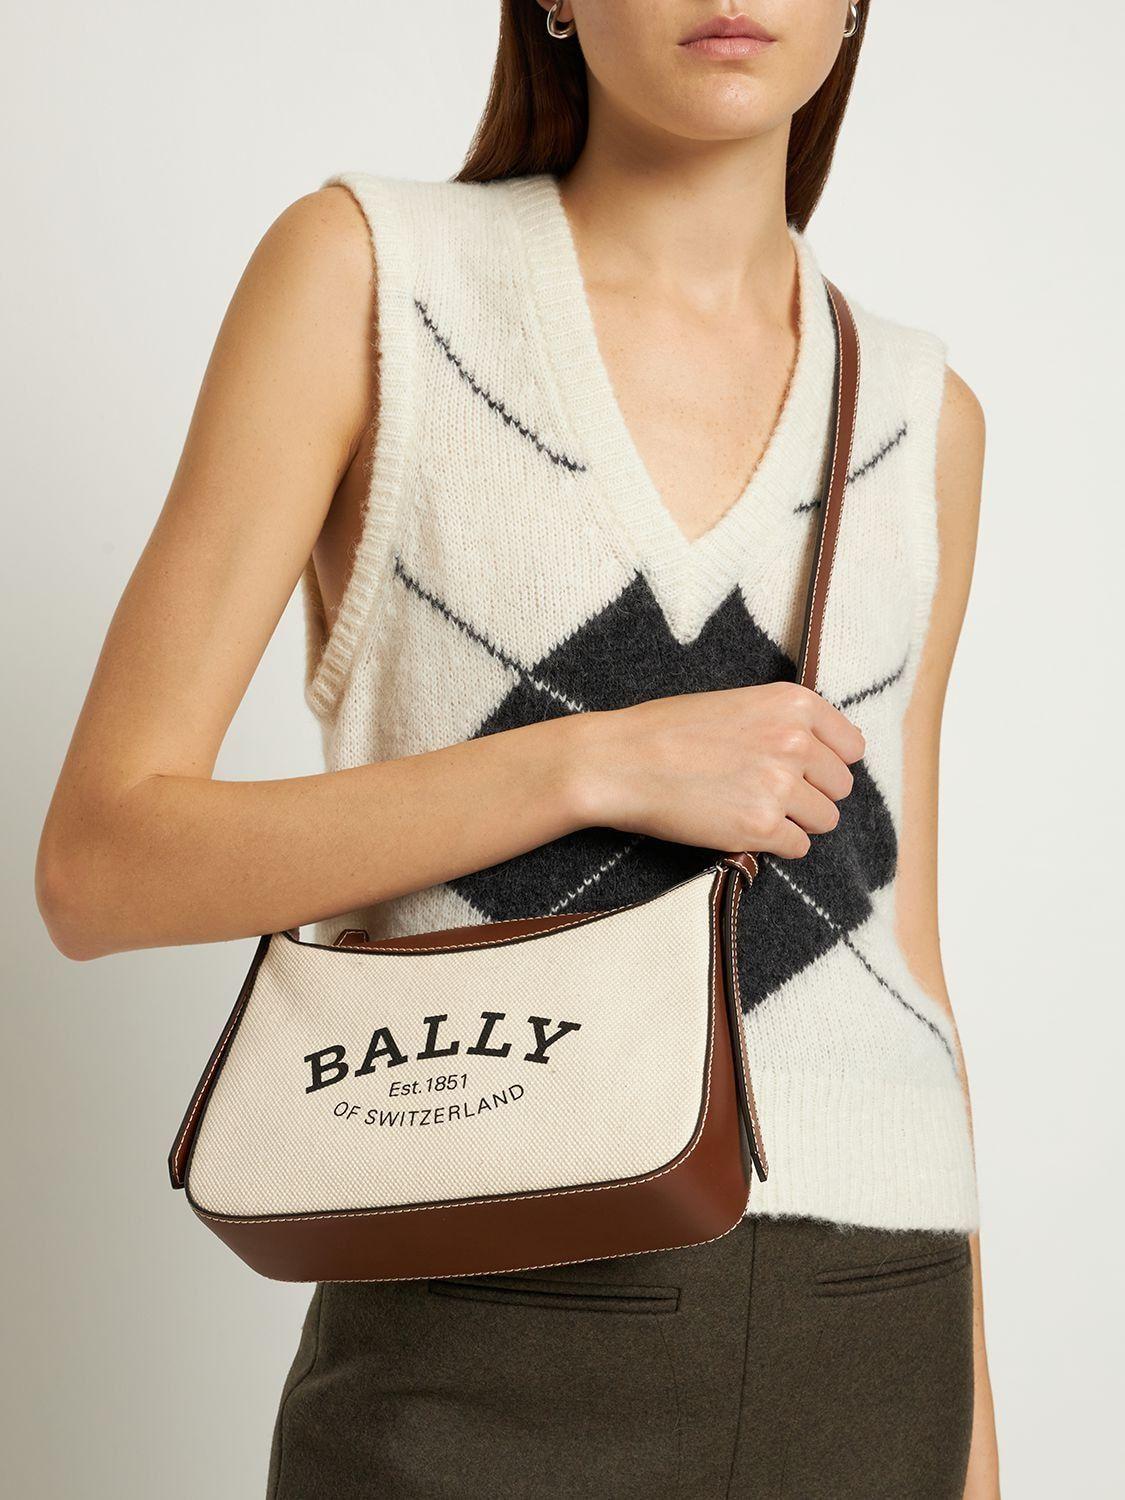 Bally Coralye.st Canvas & Leather Shoulder Bag in Natural